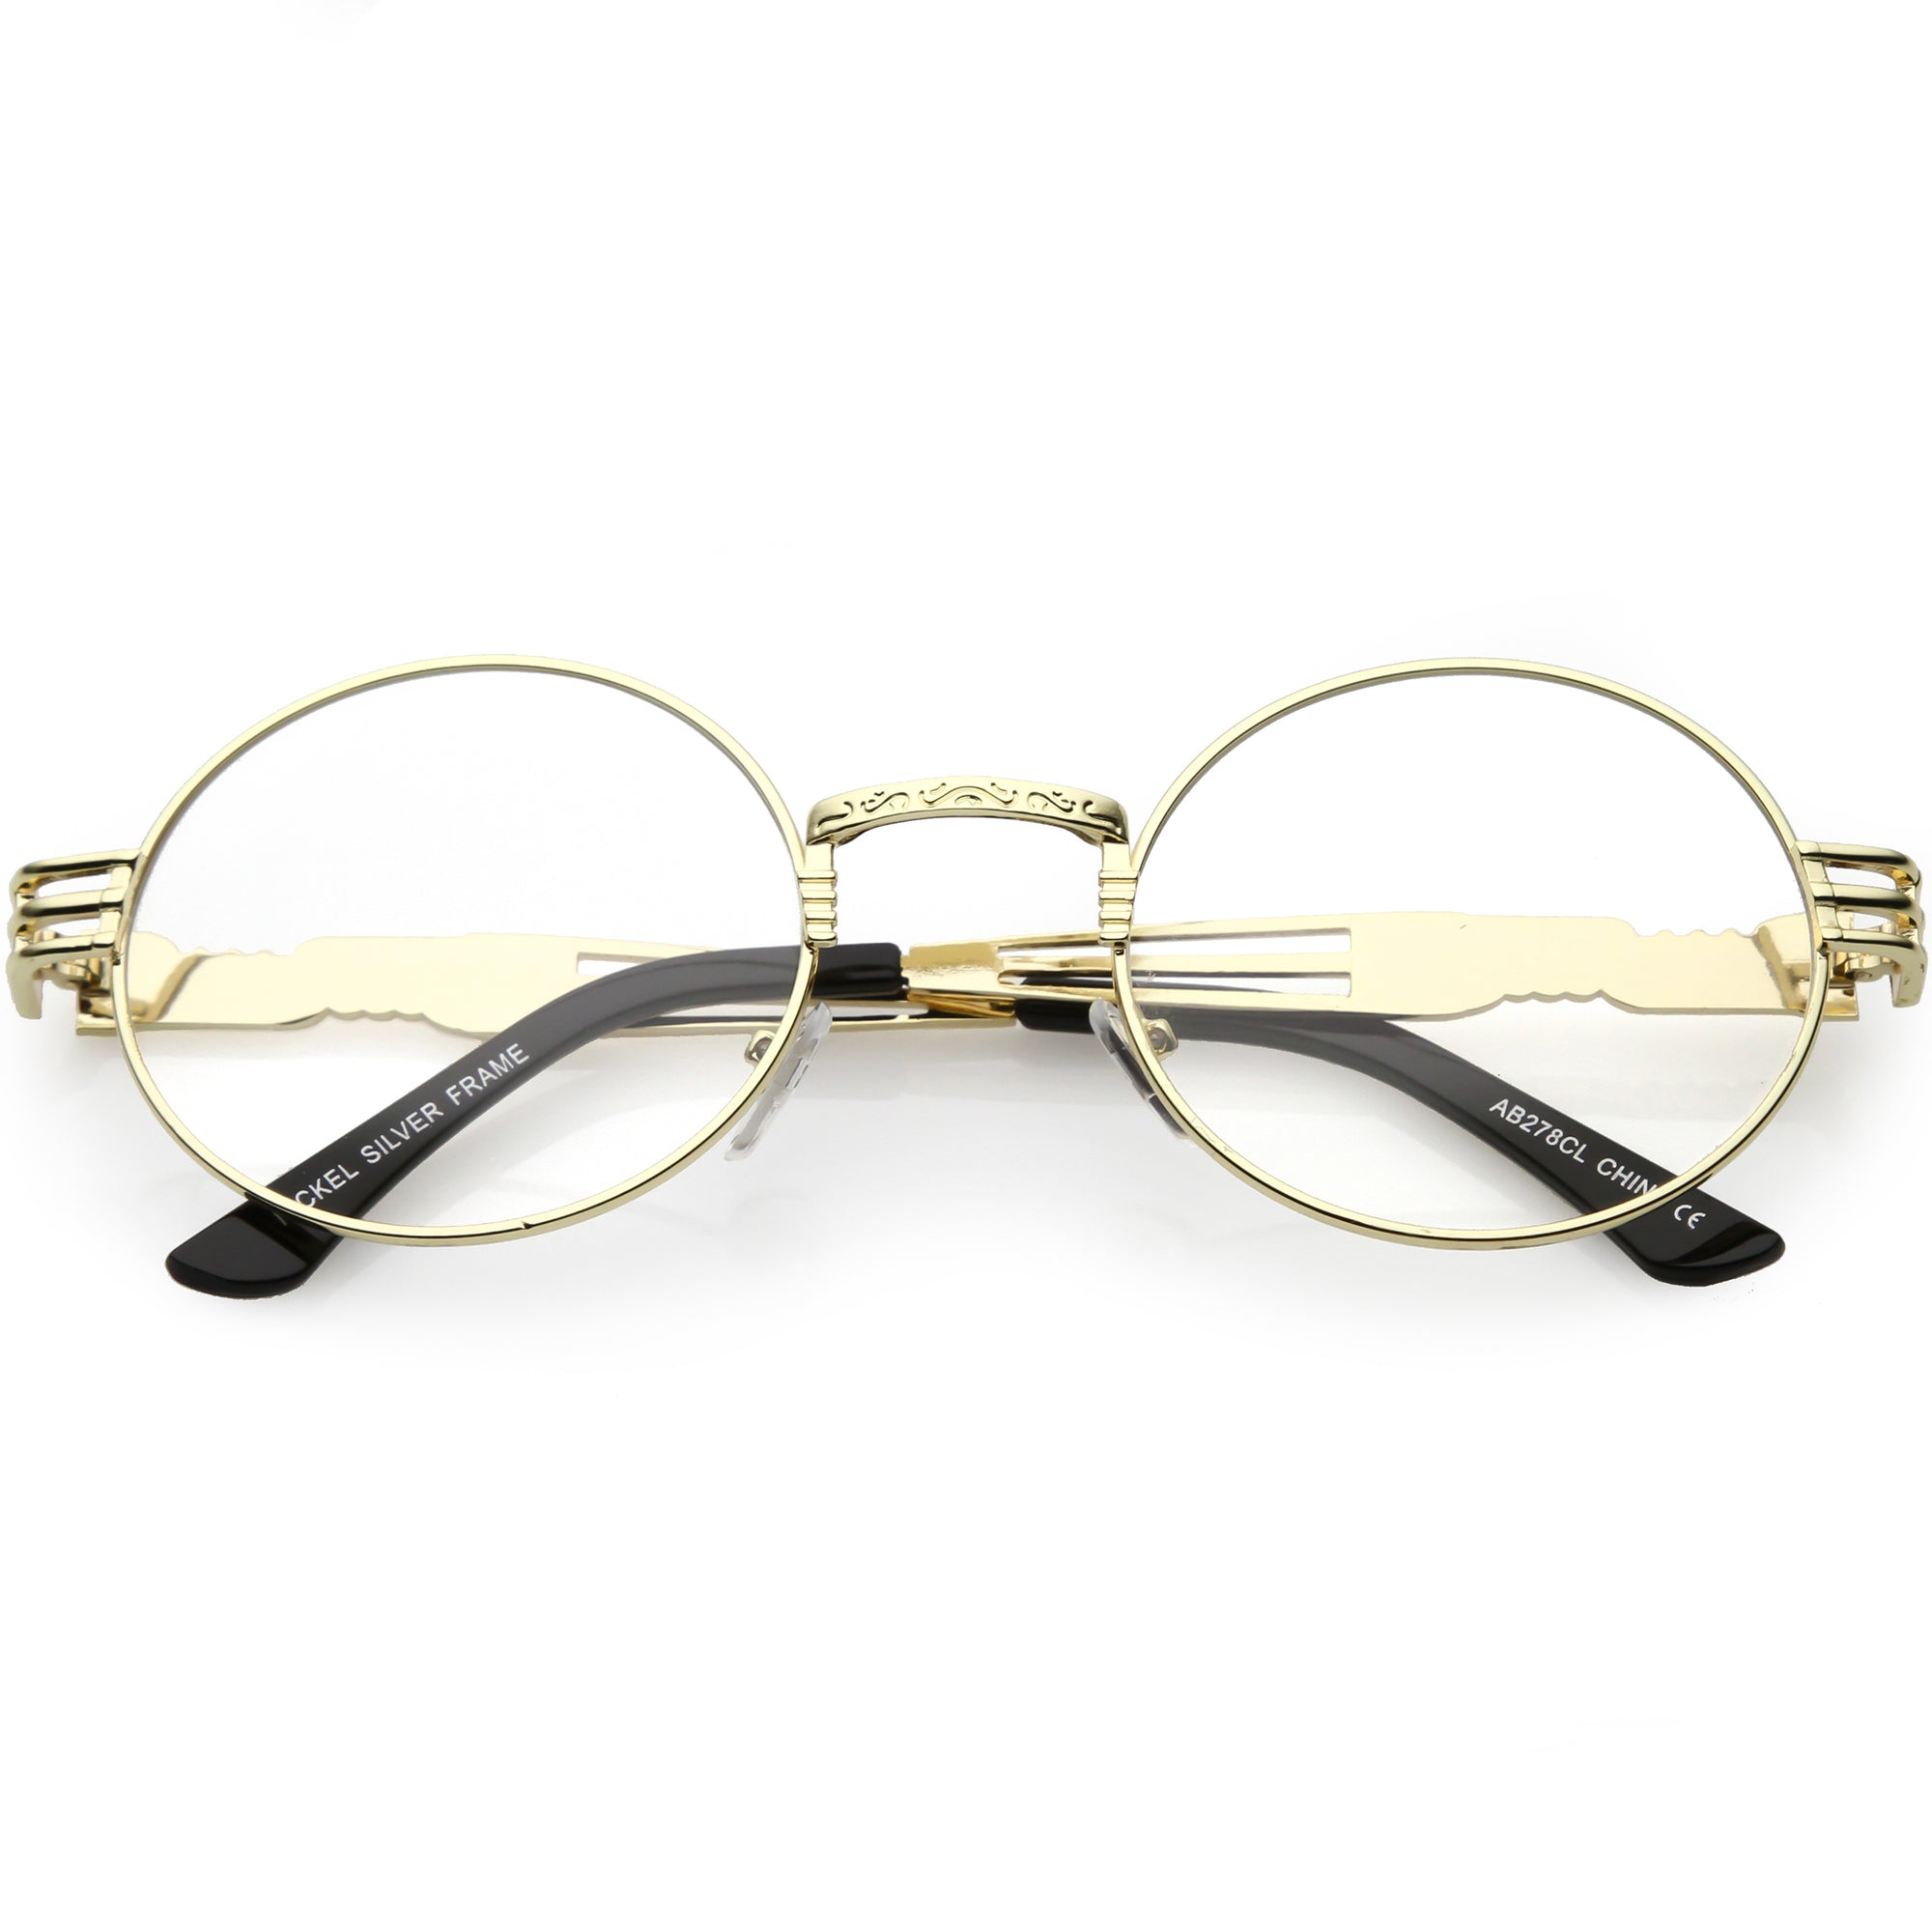 Gafas redondas retro con lentes transparentes grabadas de metal Steampunk con lentes planas C481